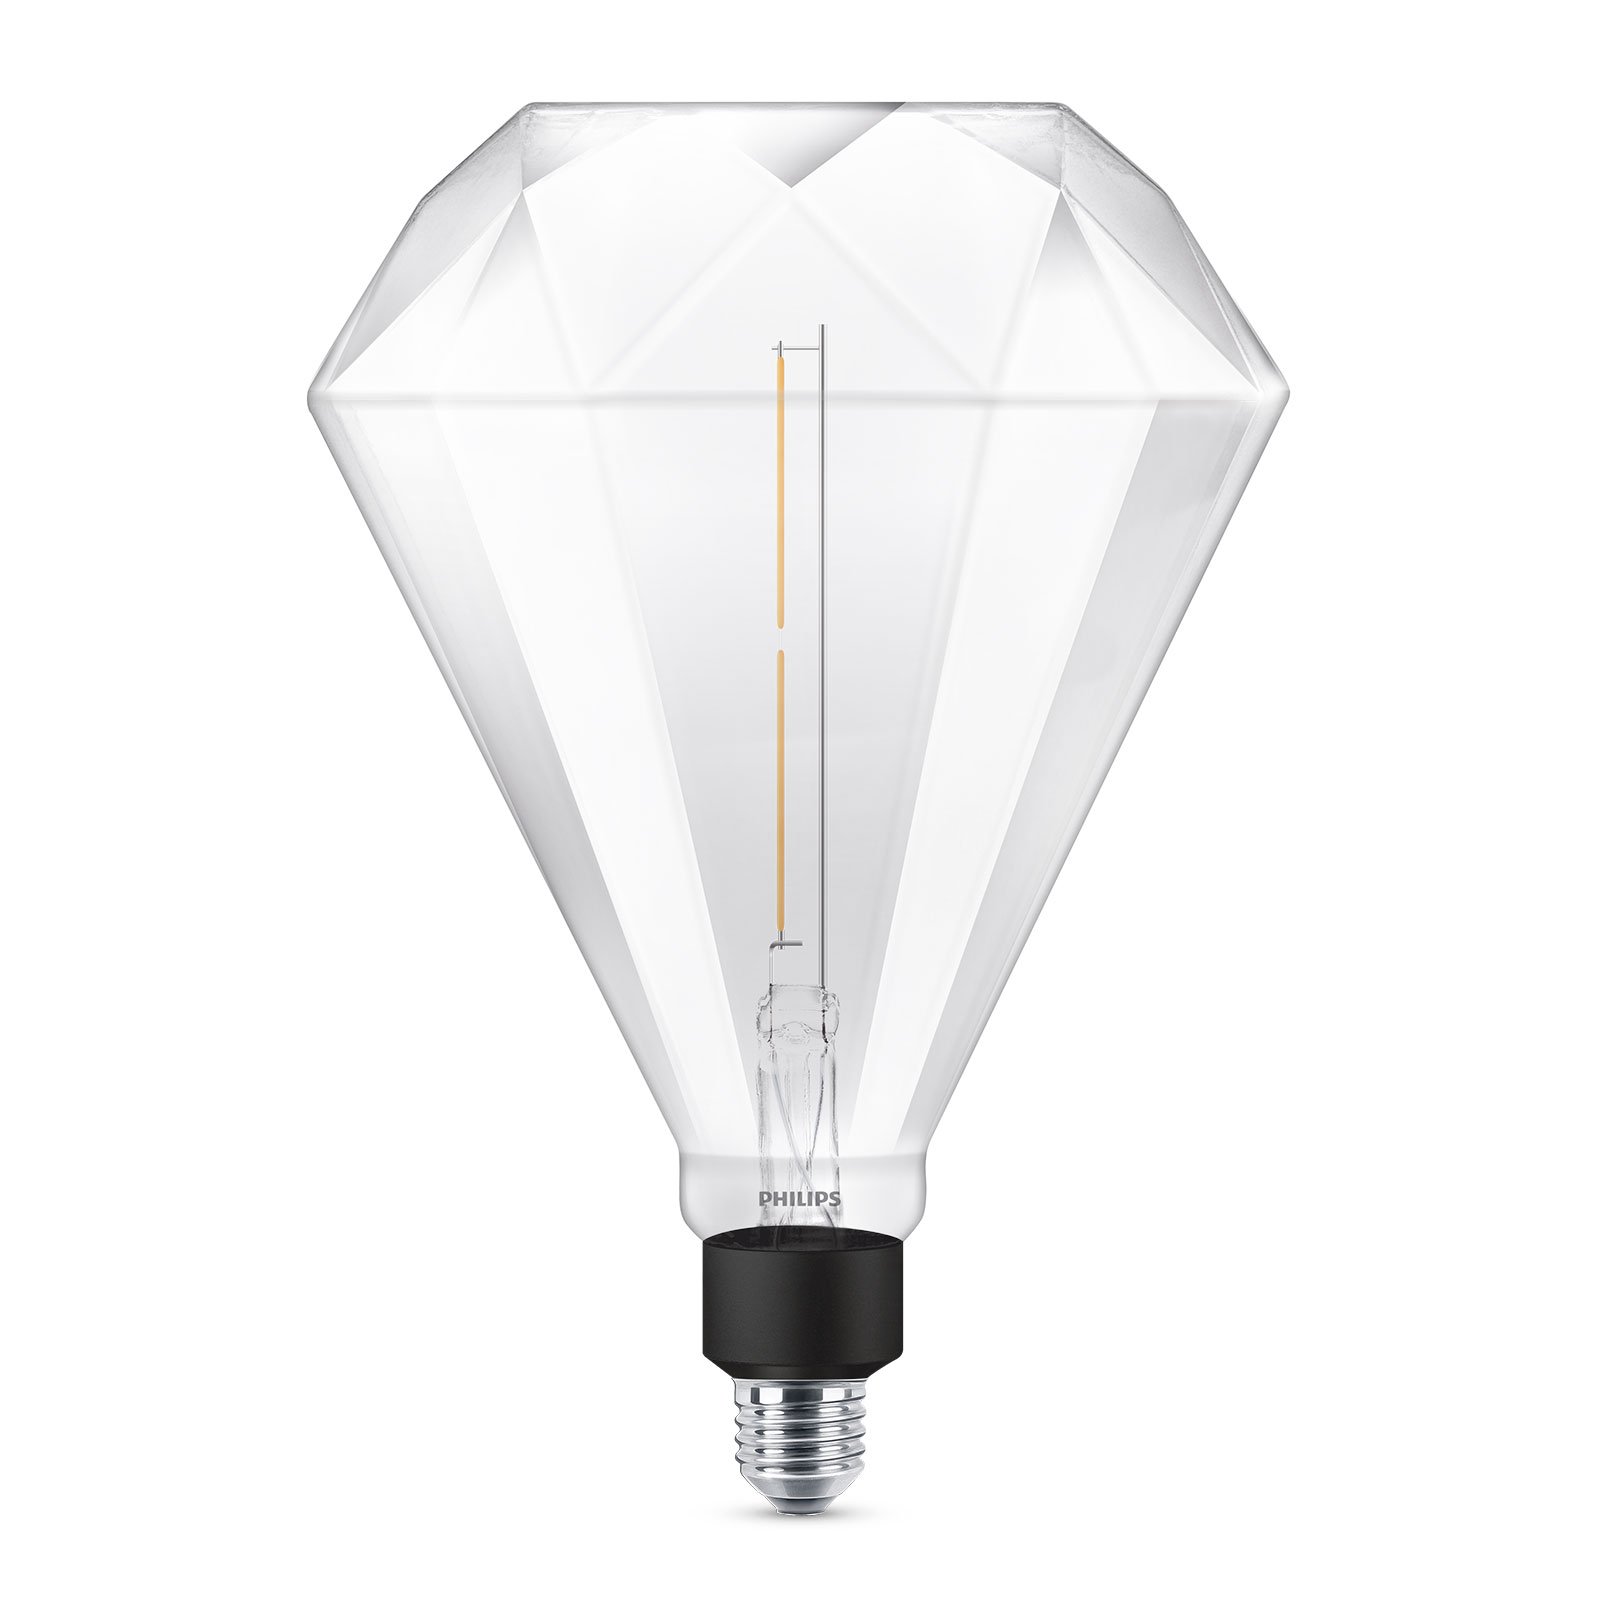 Philips Diamond giant LED bulb E27 4W